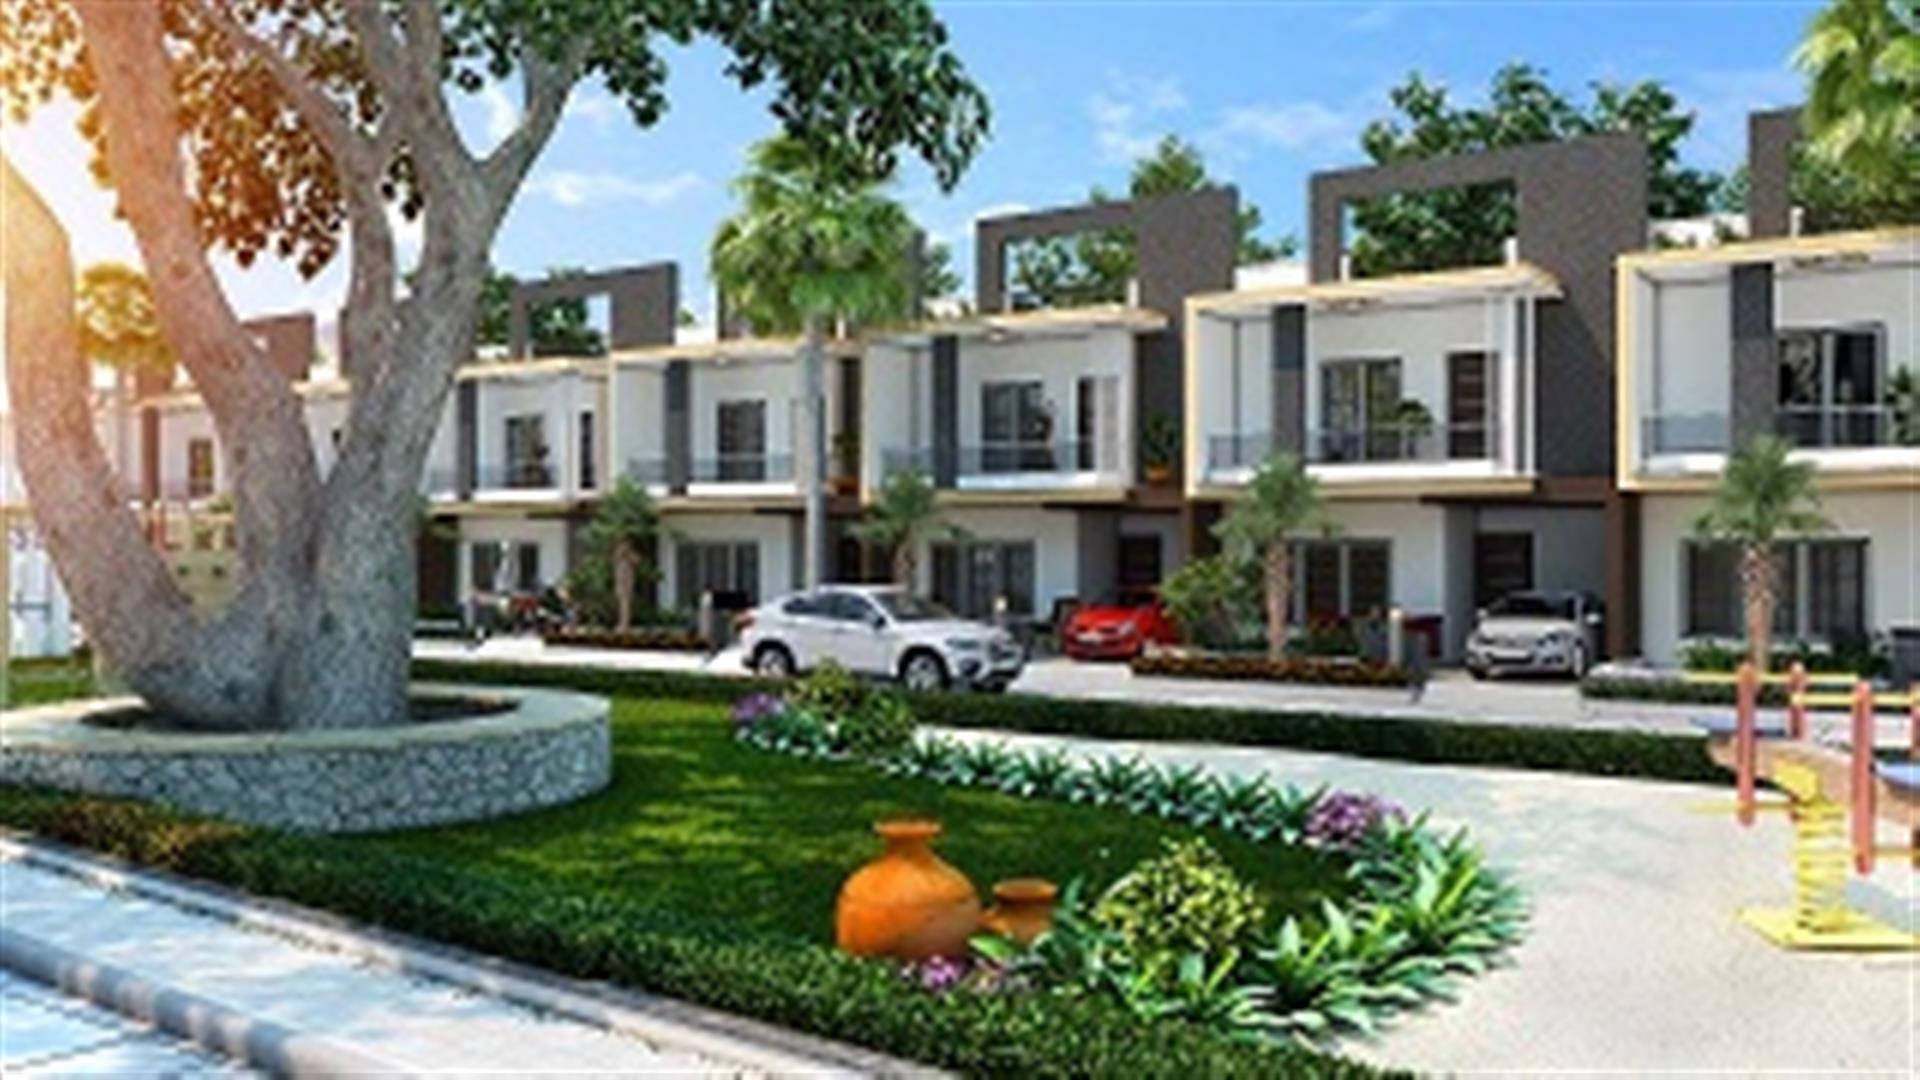 prithvi-courtyard-hoshangabad-road-bhopal-3bhk-duplex-villa-house